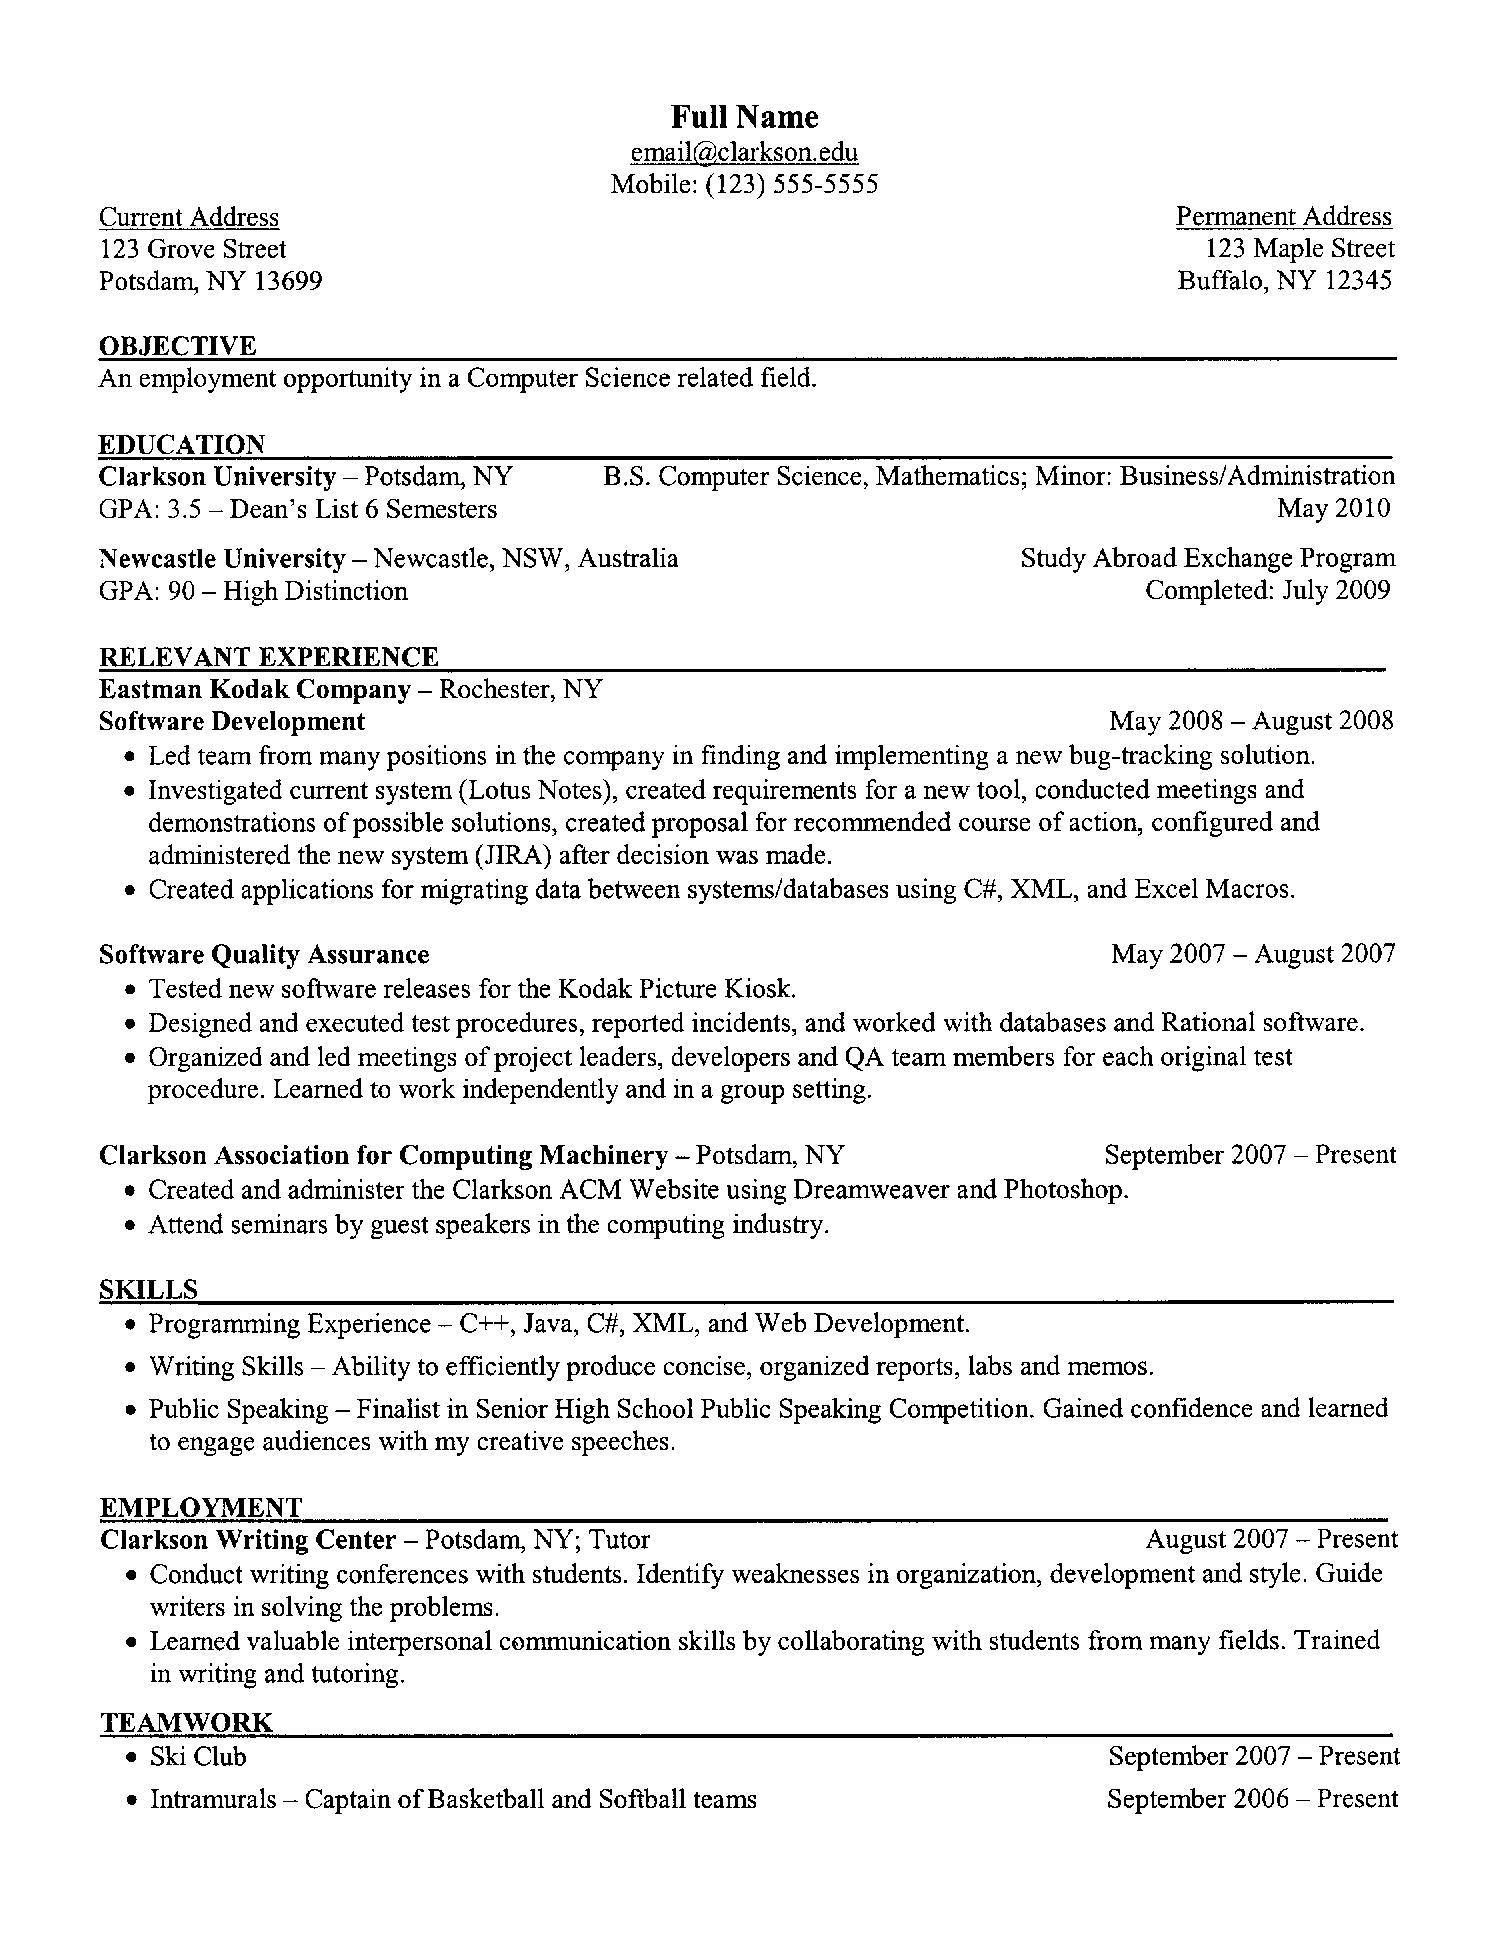 Sample Resume for Computer Science Lecturer Post Resume Templates Computer Science – Resume Templates Student …